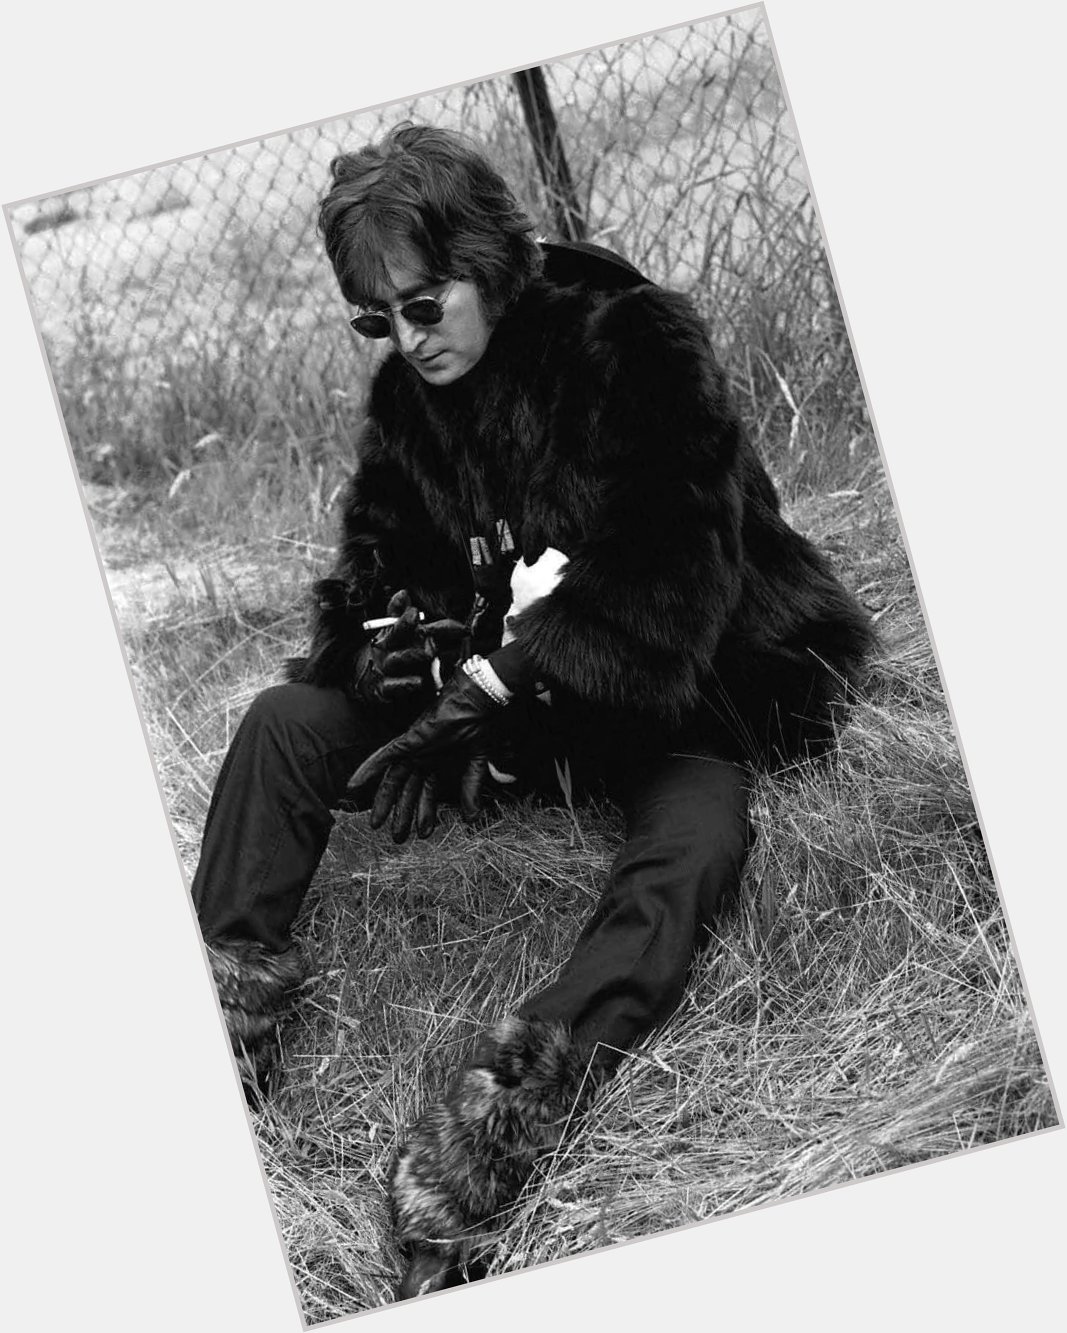                 John Lennon     Happy Birthday John!                          